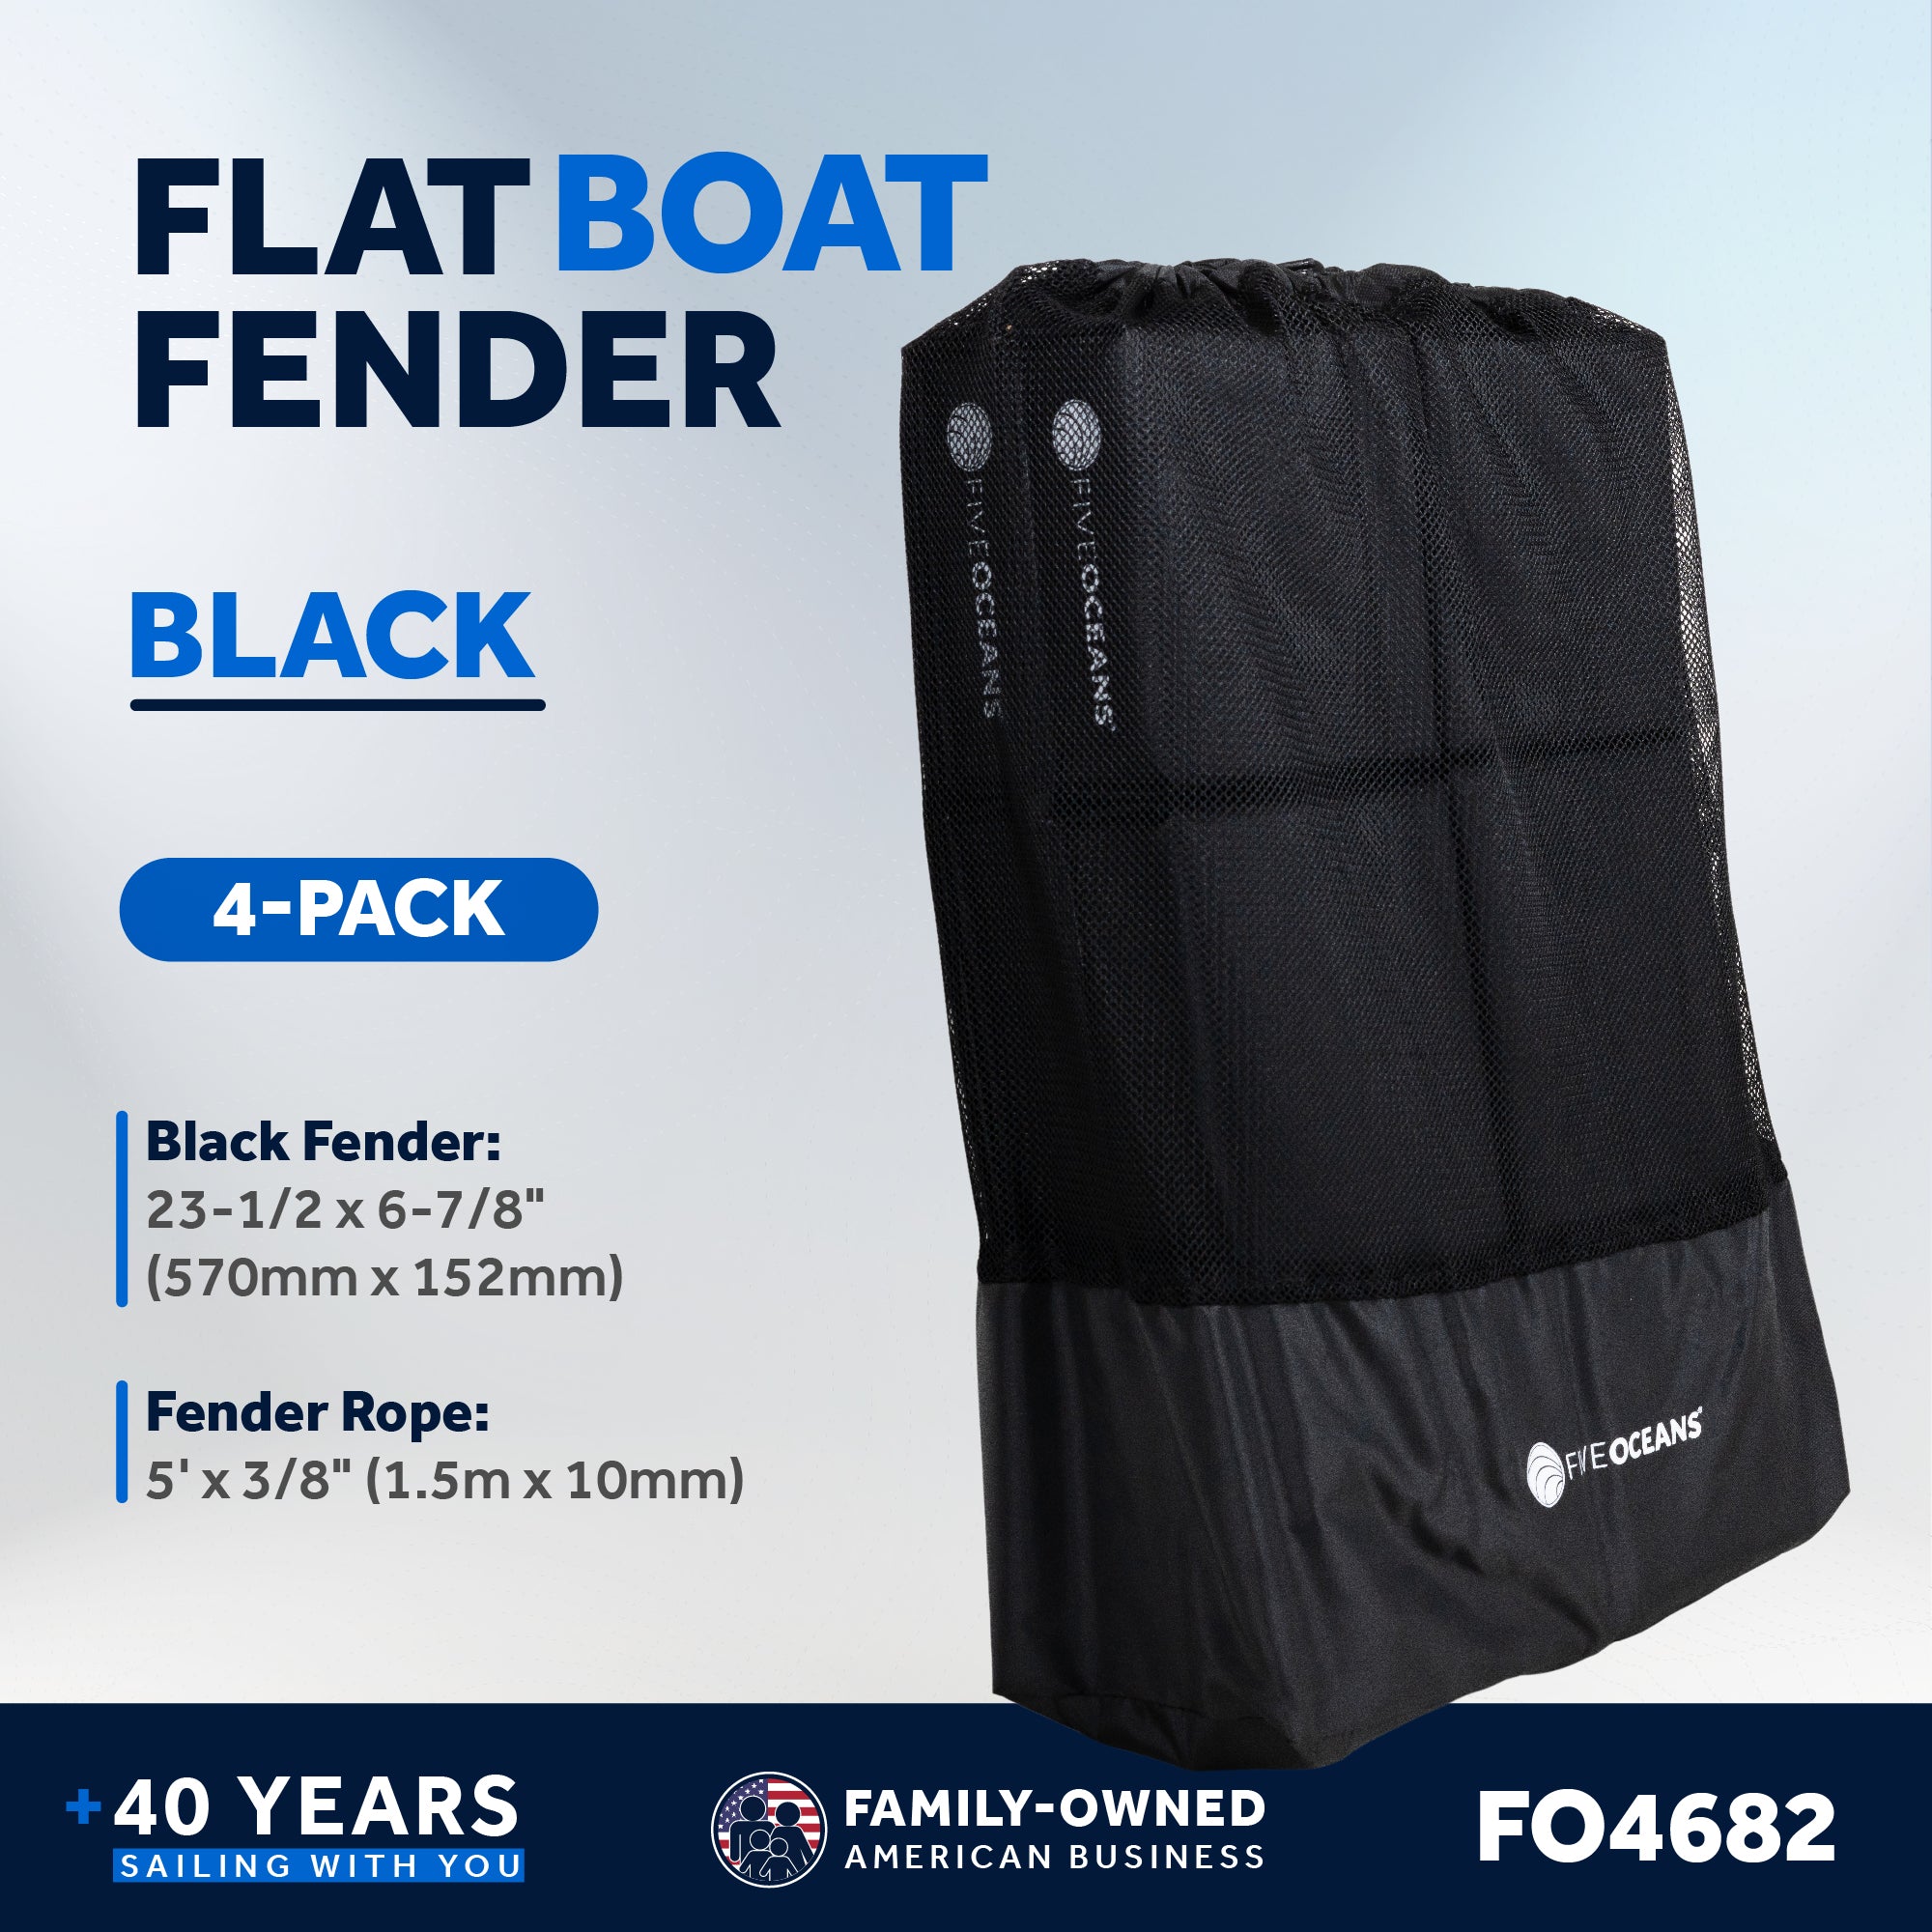 Boat Contour Fender 23-1/2" x 6-7/8" x 2-1/2", Black, 4-Pack - FO4682